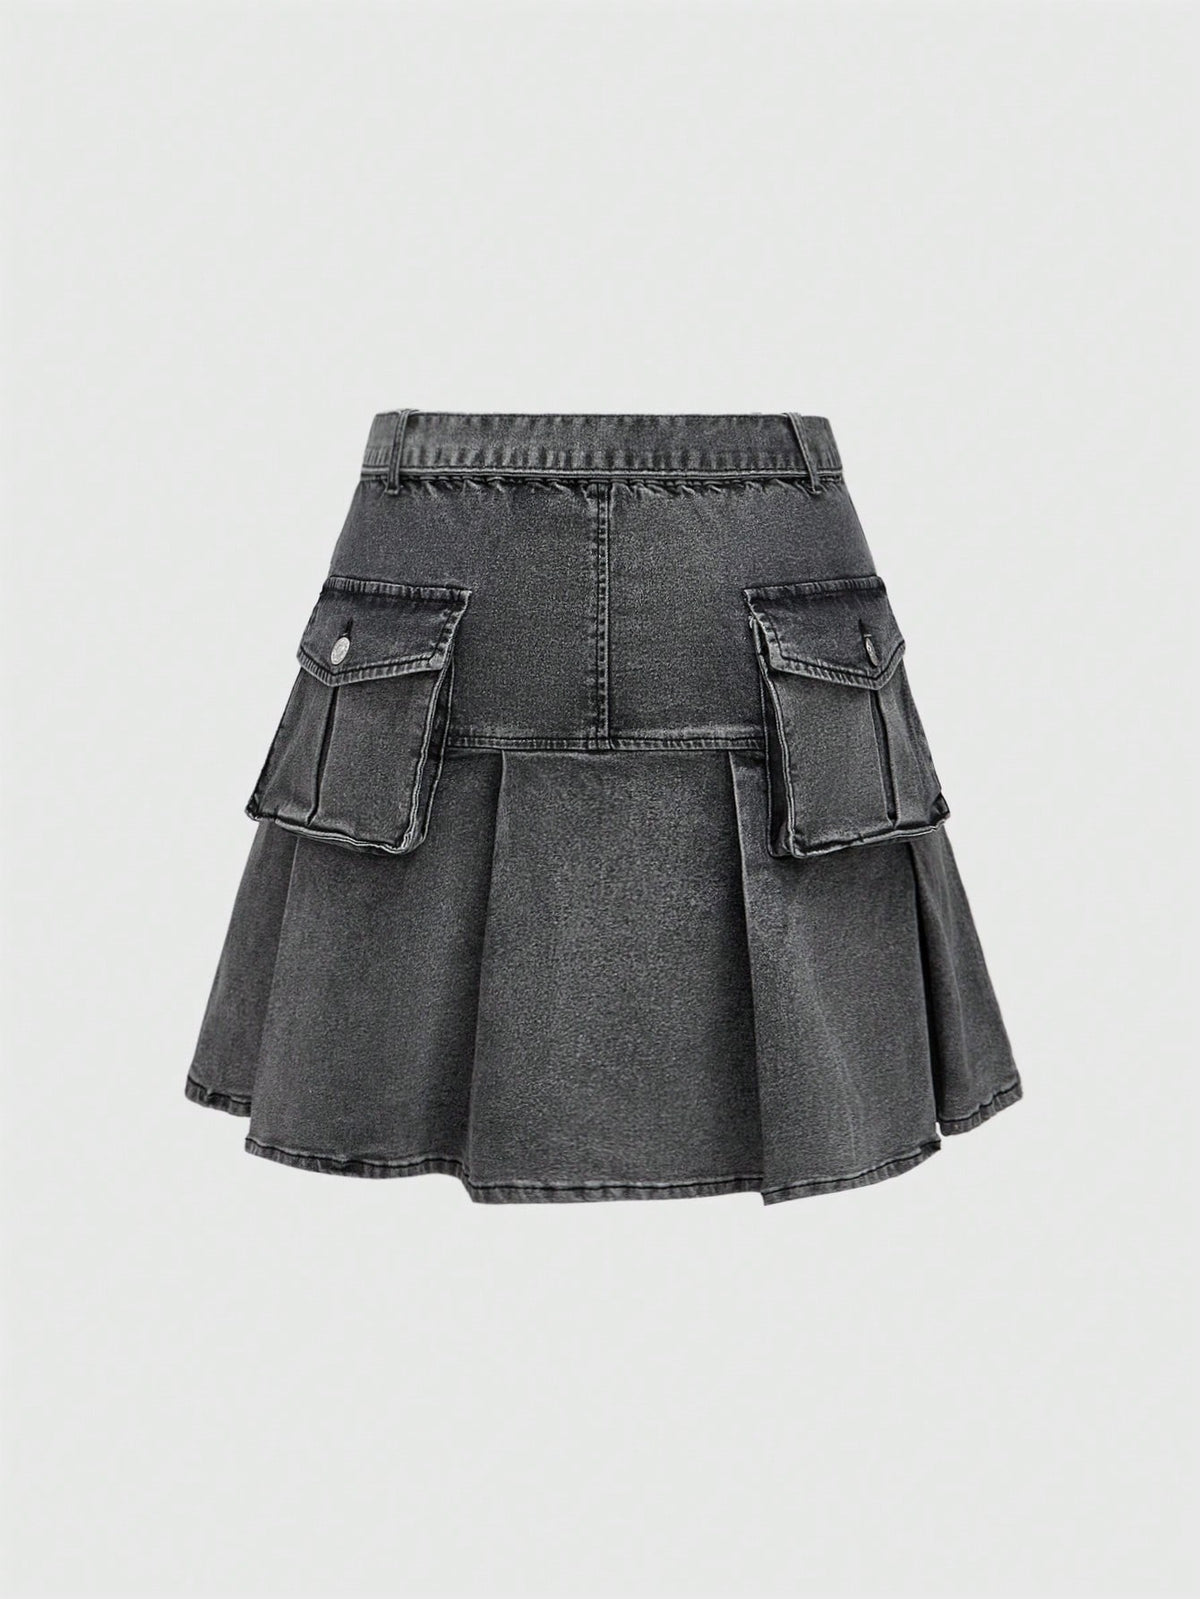 ROMWE J-Fashion Plus Size Women Flap Pocket Pleated Denim Skirt